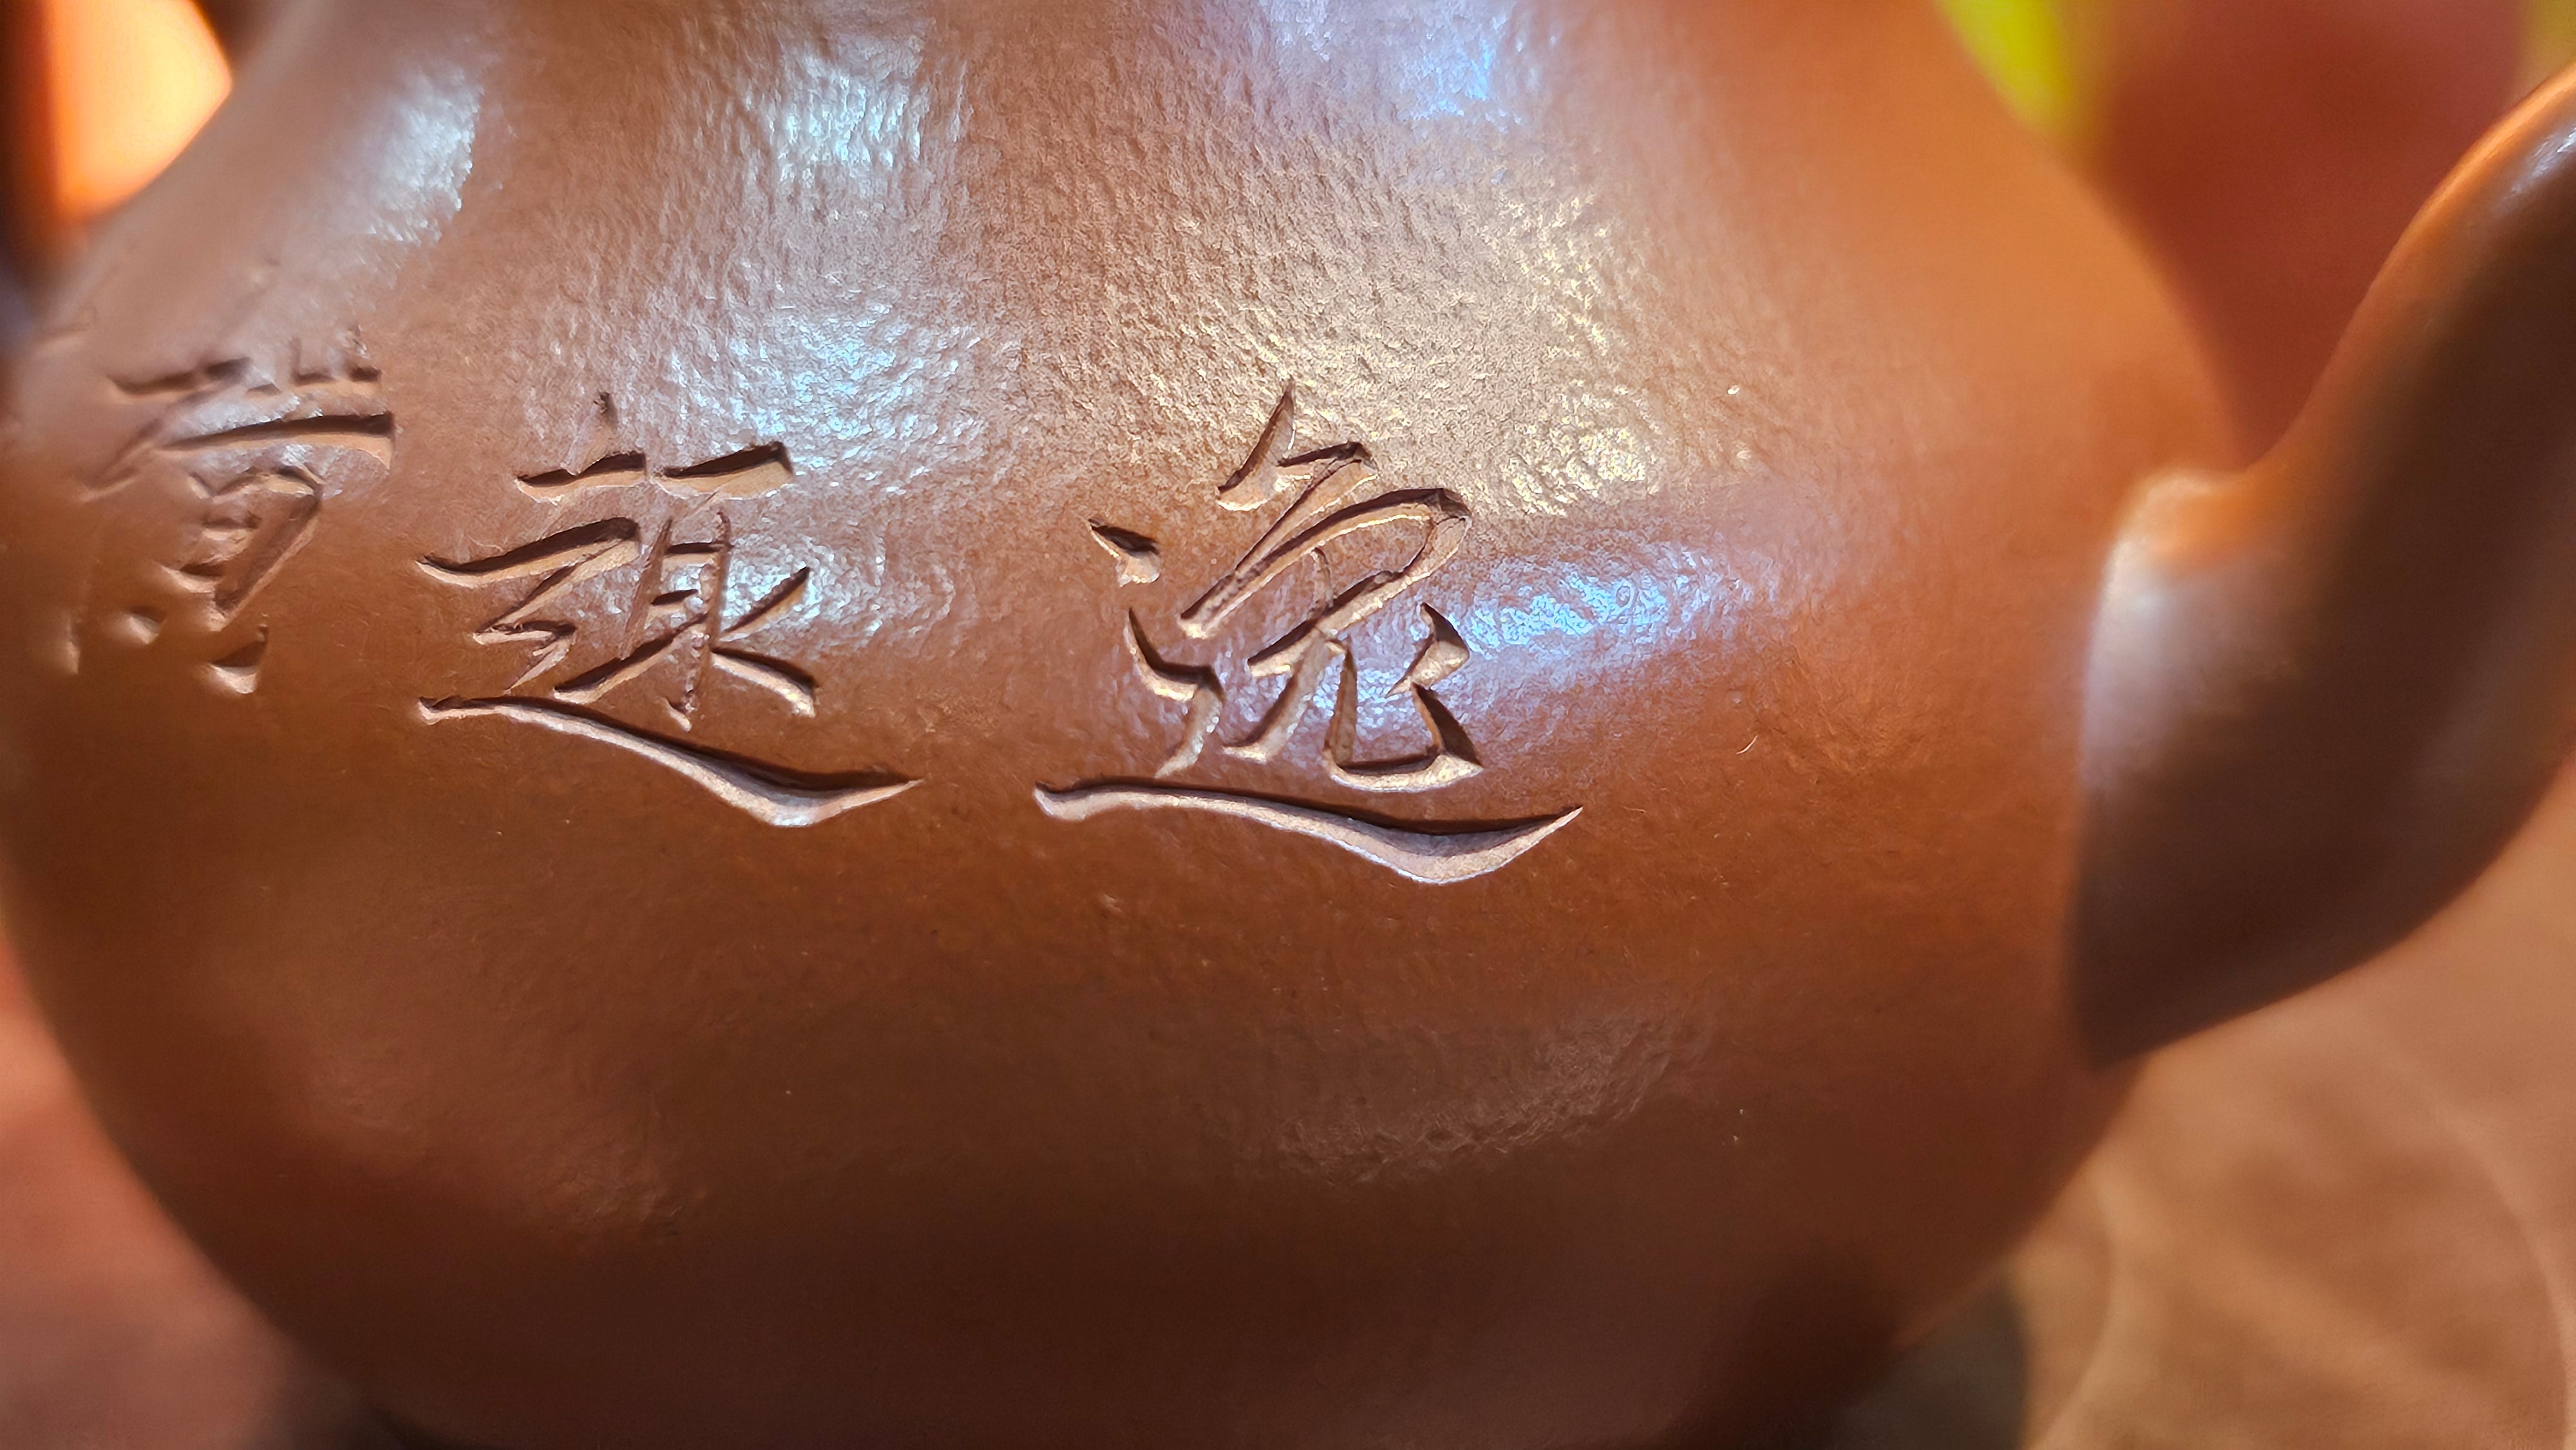 Li Xing 梨形, 181.3ml, Xiao Mei Yao Zhu Ni 小煤窑朱泥, by Craftsman Wang Xing 王兴, Engraving by Craftsman Ding Tie Ping 丁铁平 (Artistic Byname 一德).